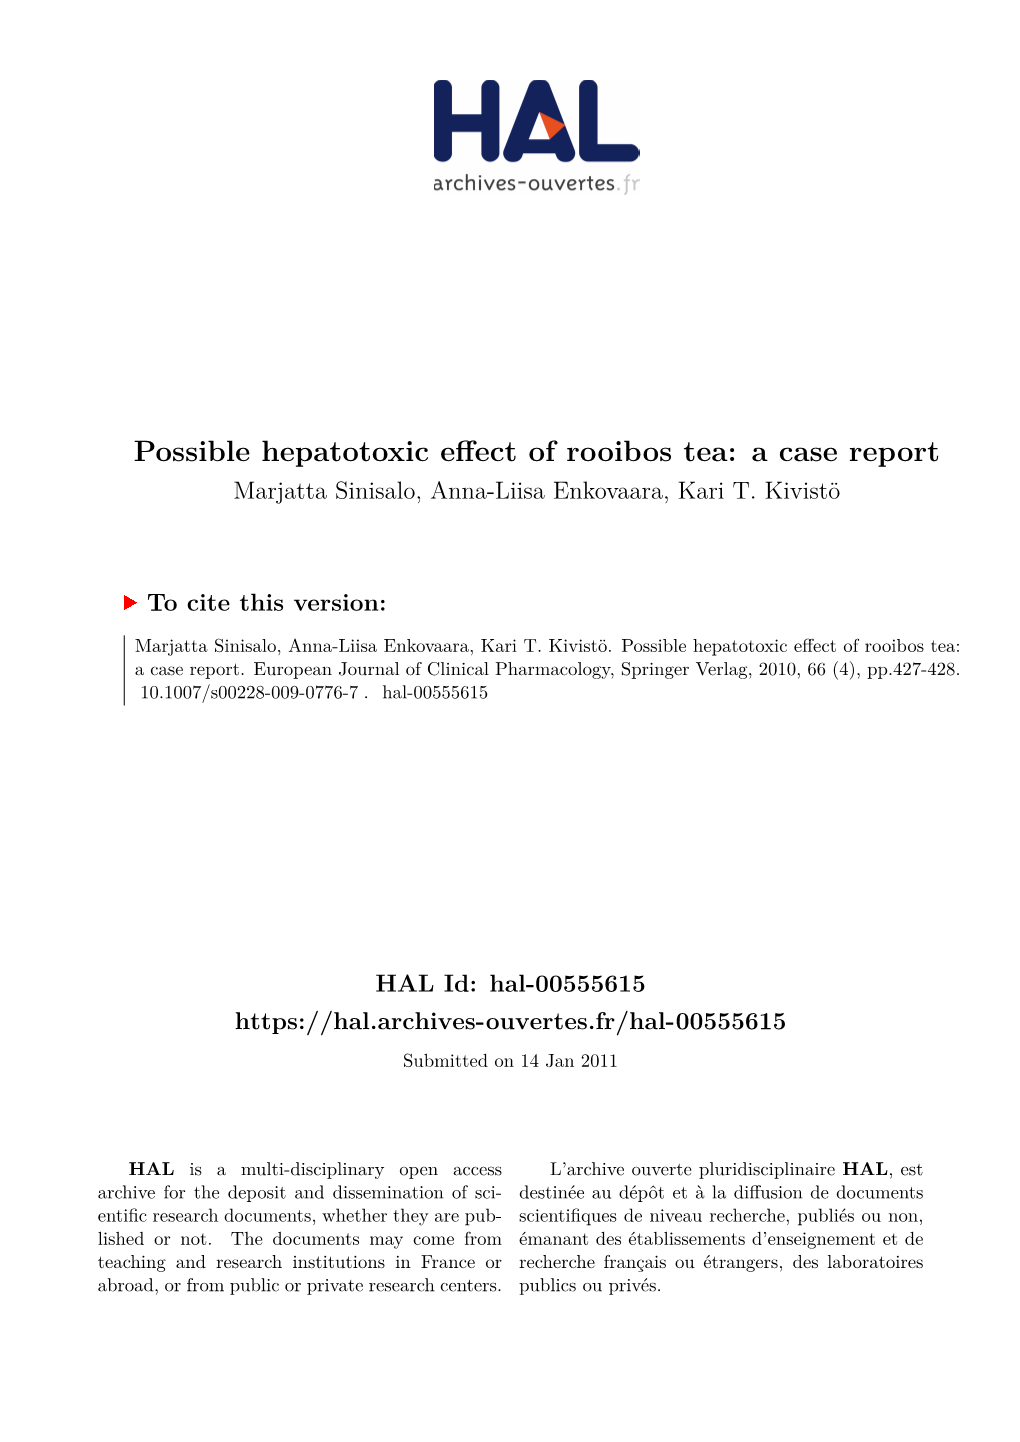 Possible Hepatotoxic Effect of Rooibos Tea: a Case Report Marjatta Sinisalo, Anna-Liisa Enkovaara, Kari T